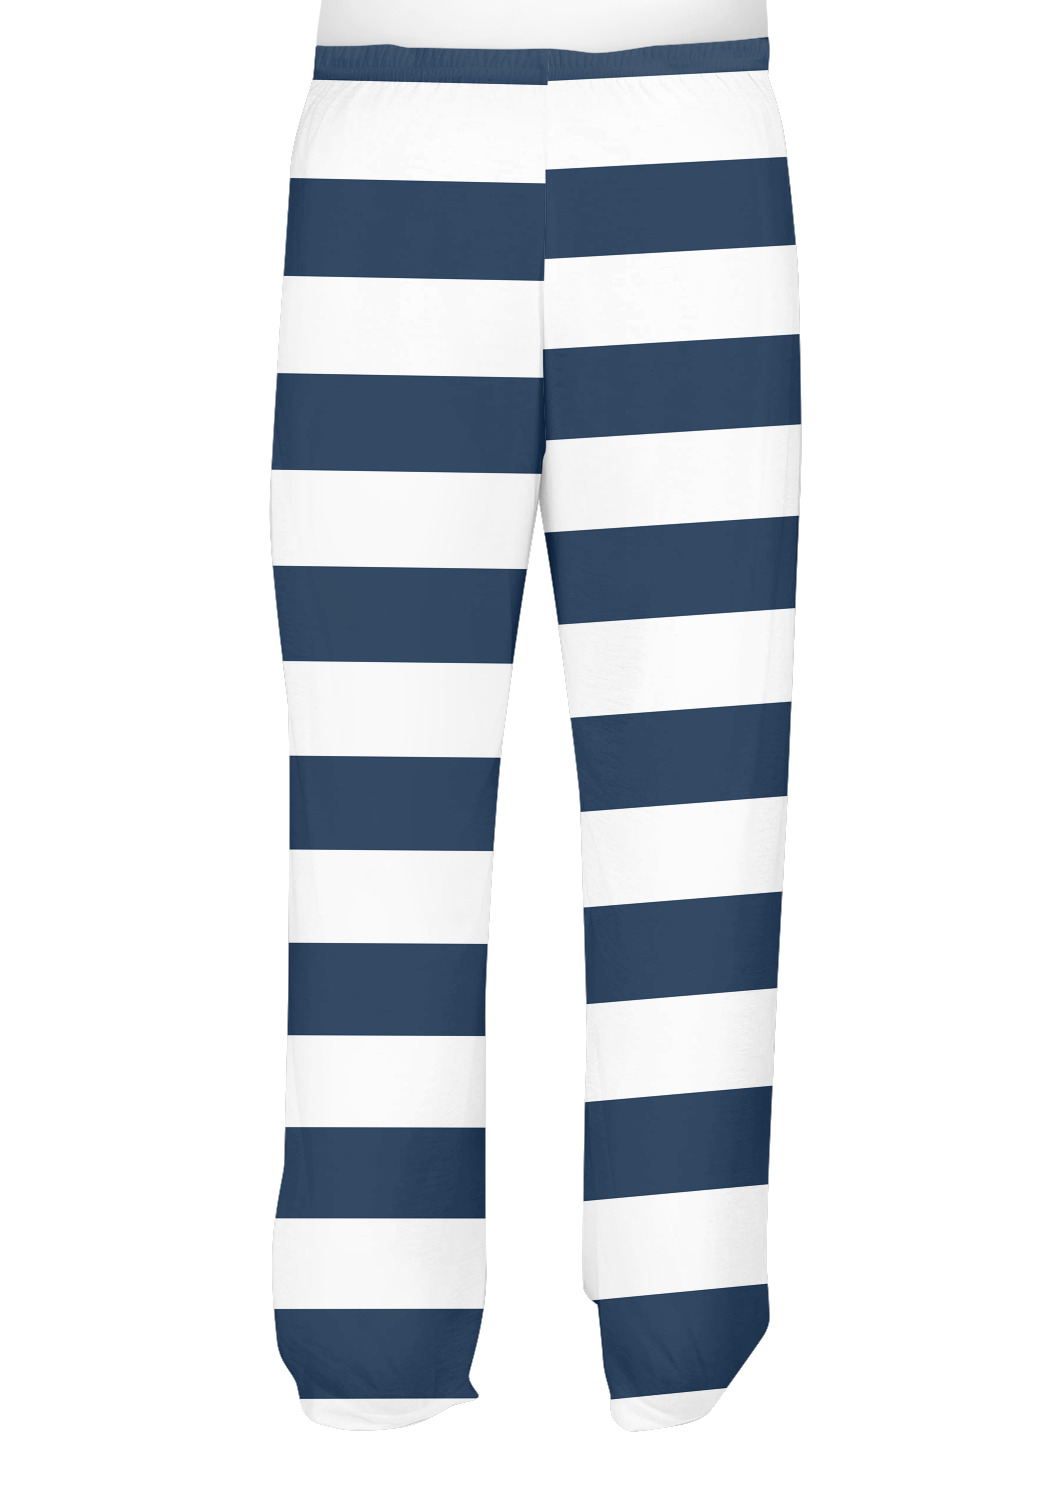 Custom Horizontal Stripe Mens Pajama Pants